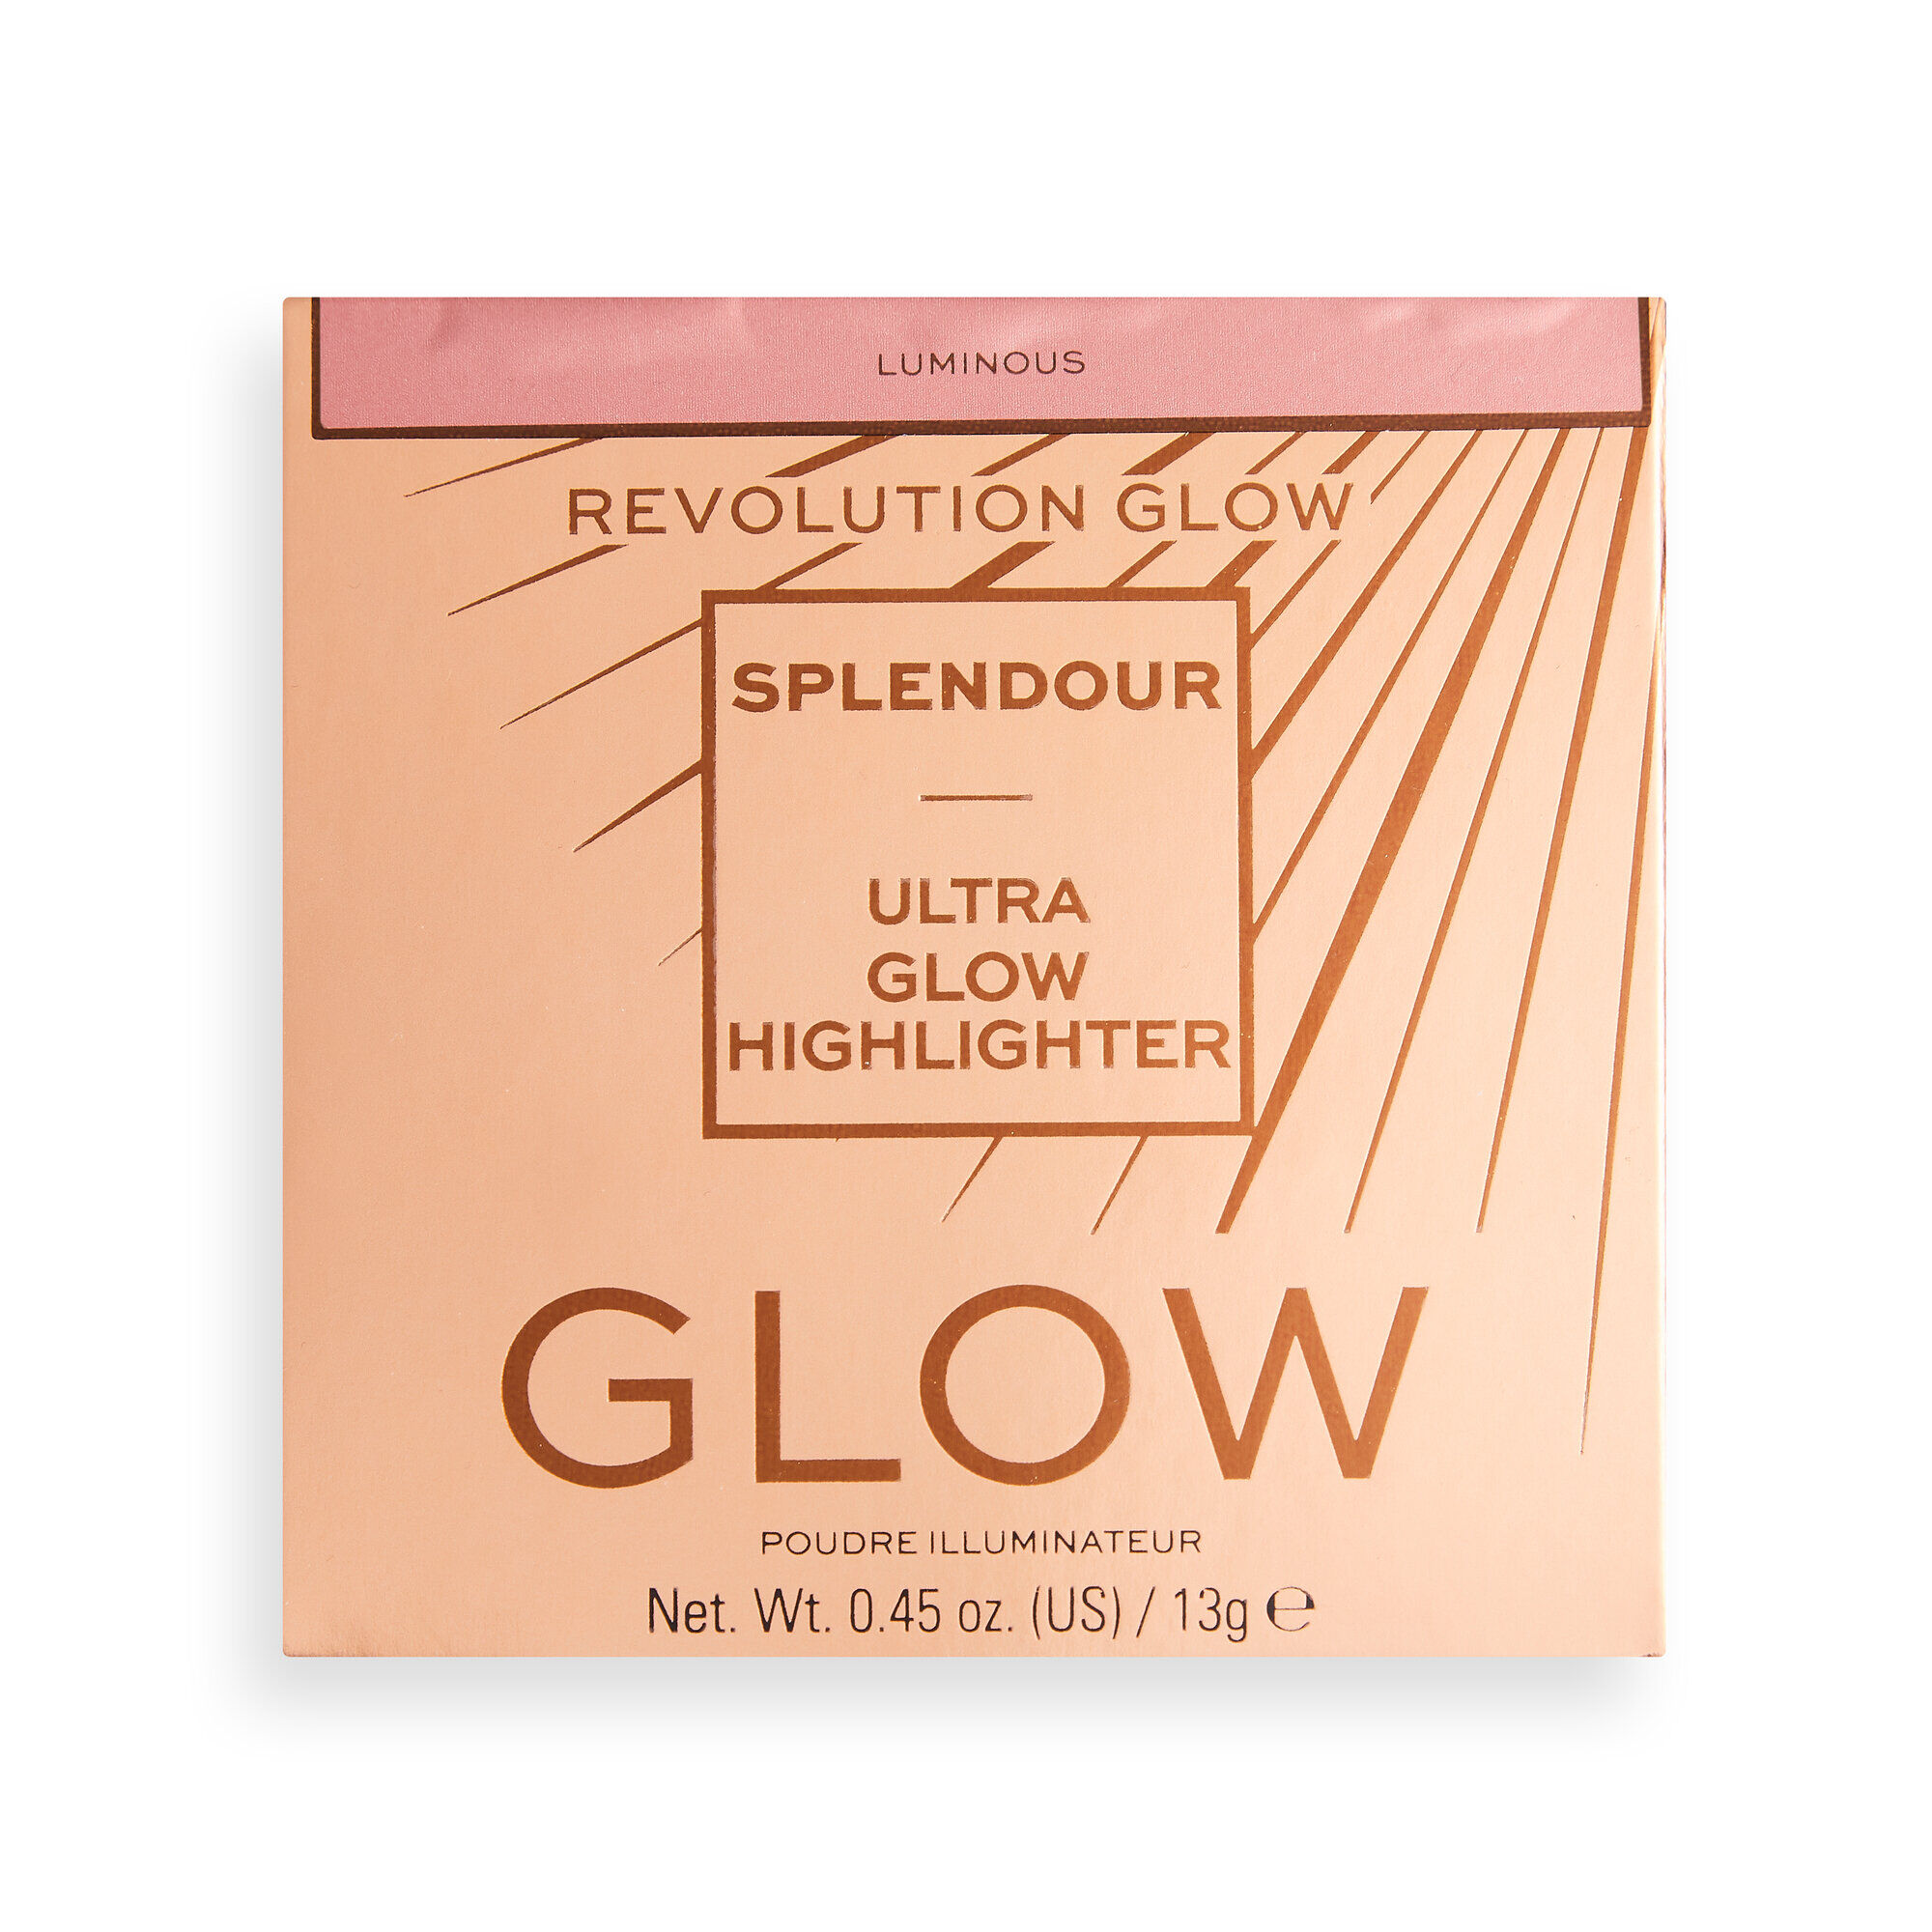 Makeup Revolution Glow Splendour Highlighter Luminous | Revolution Beauty